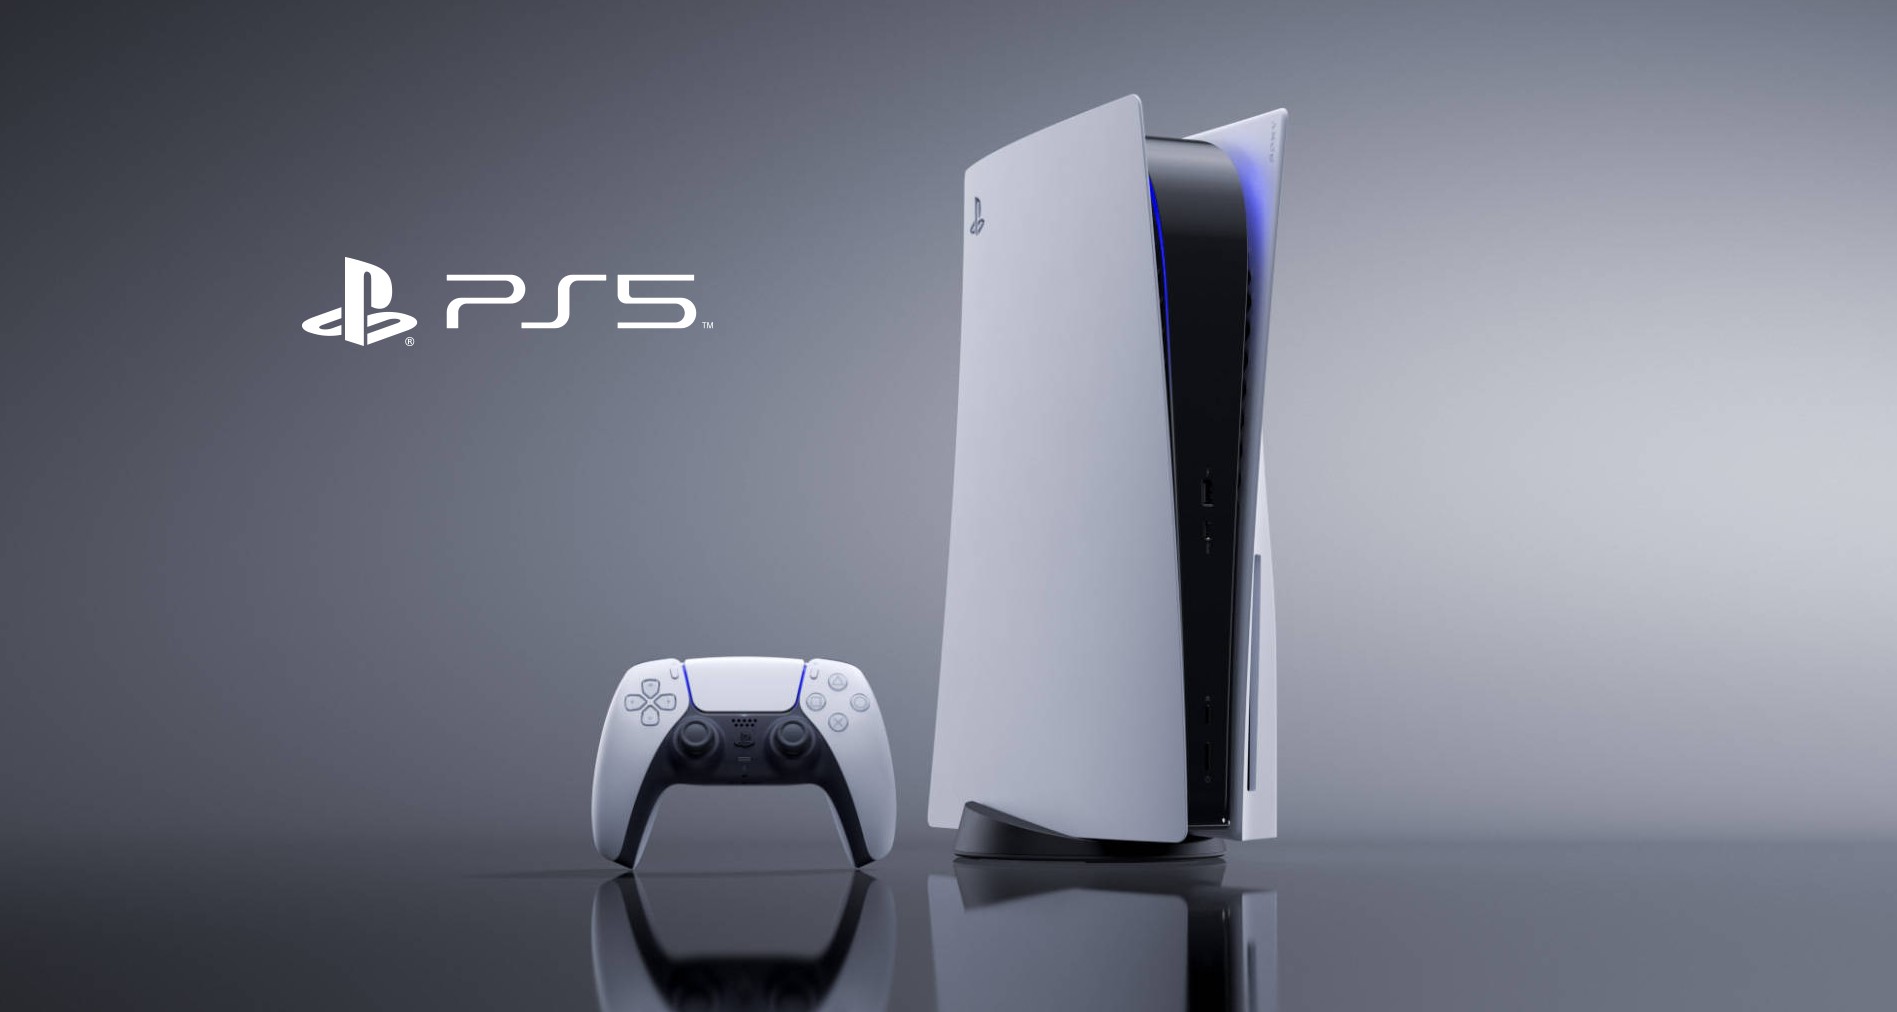 Console PlayStation®5 + FIFA 23 : : Games e Consoles